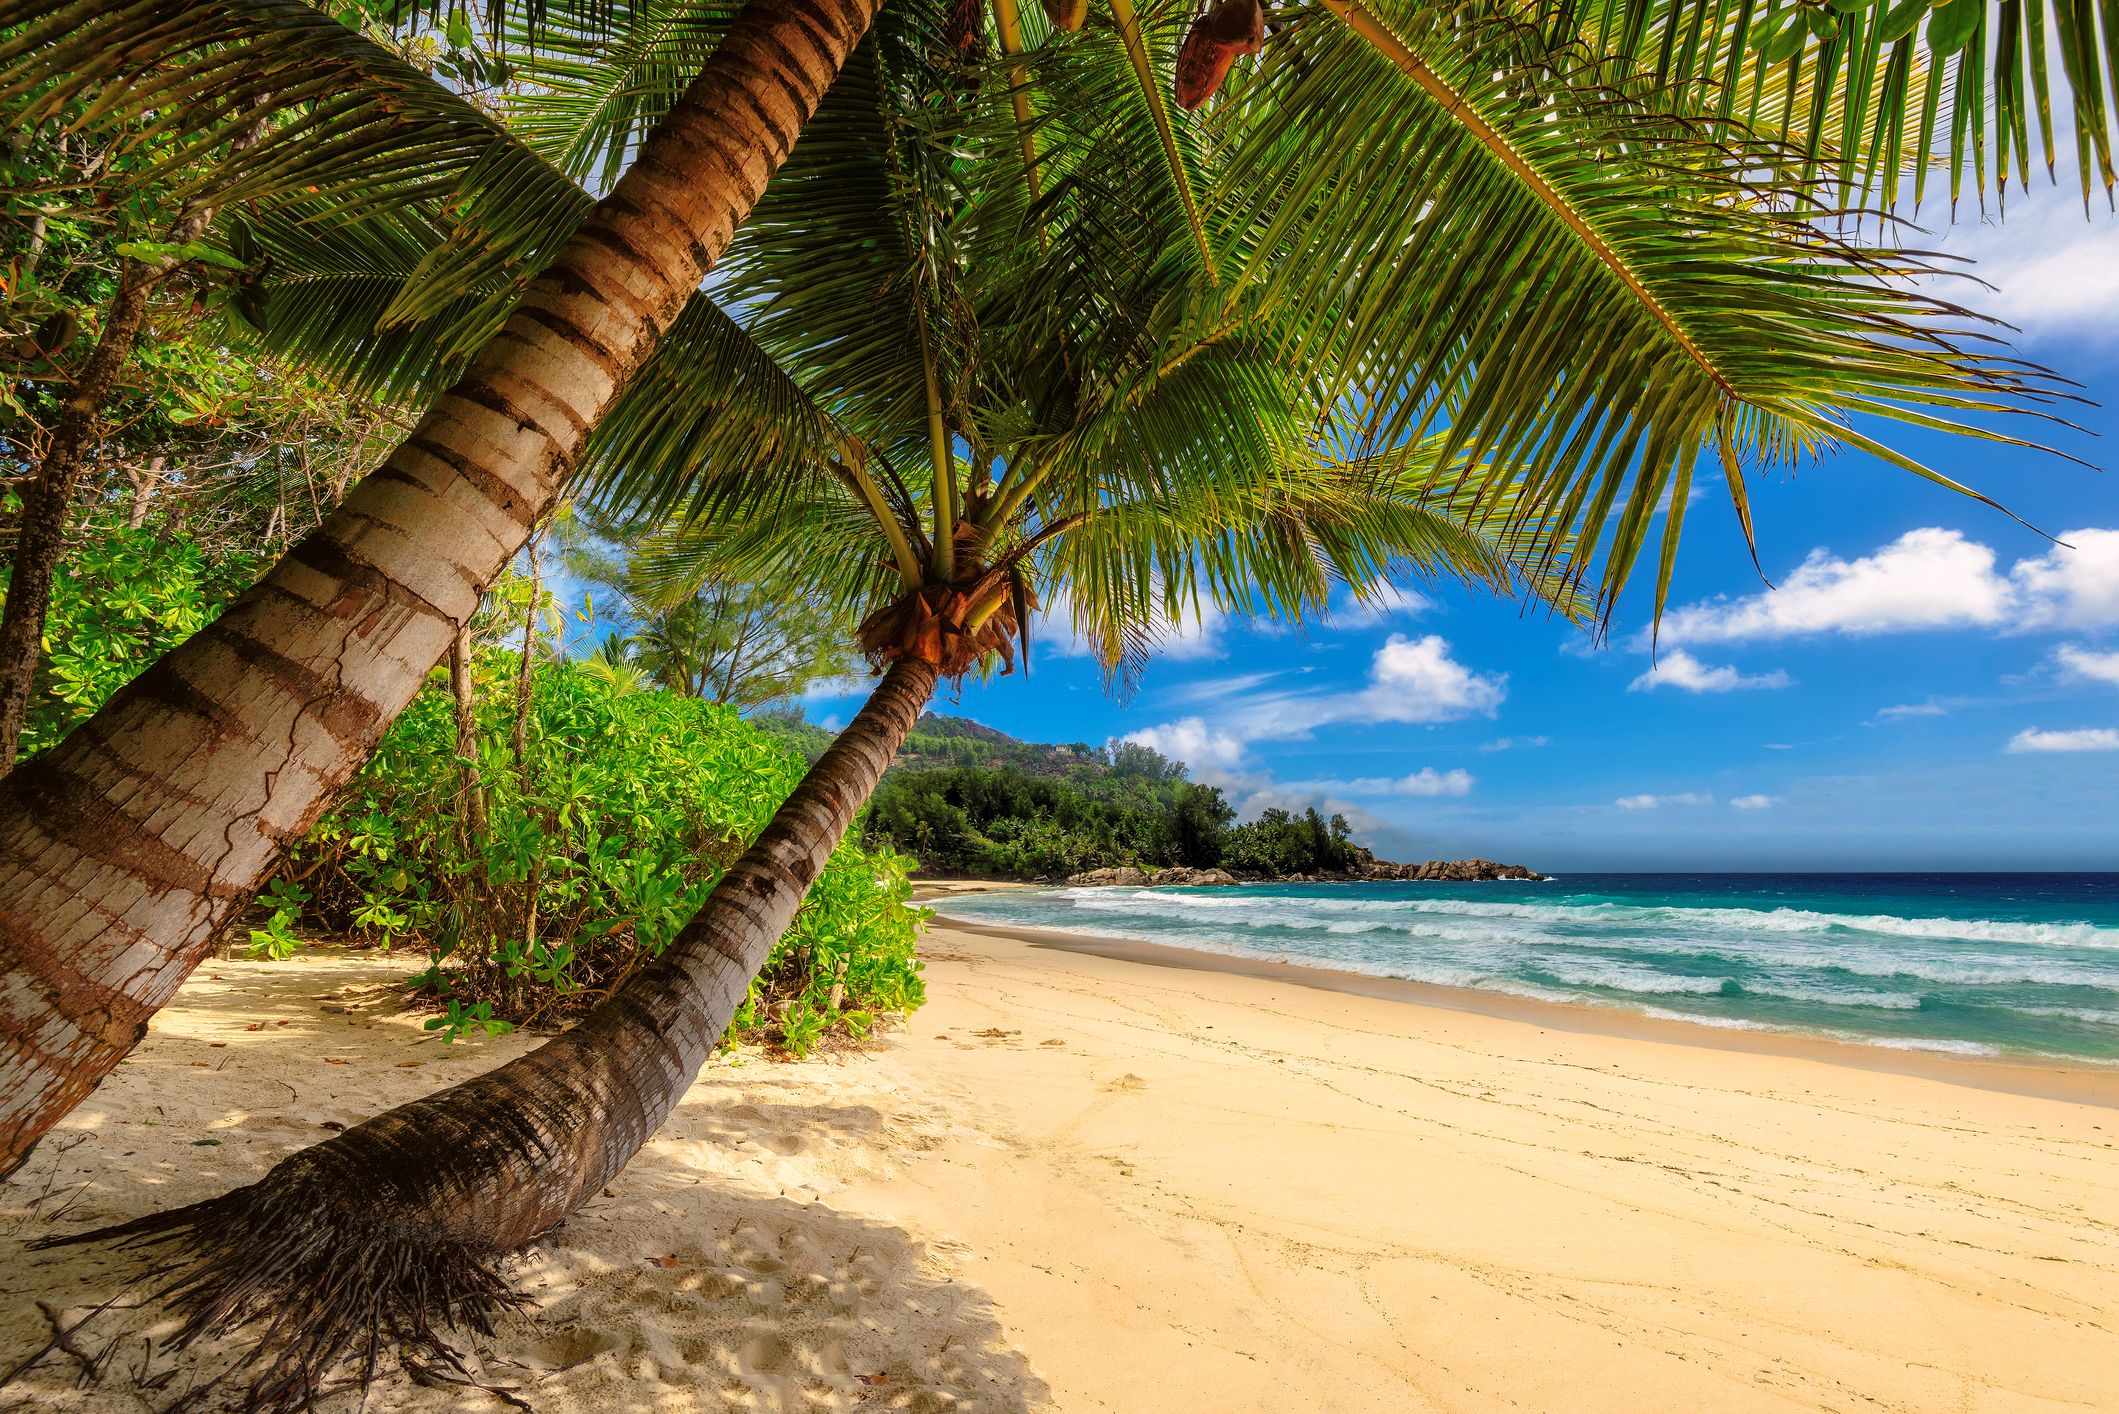  Tropical beach and palm tree